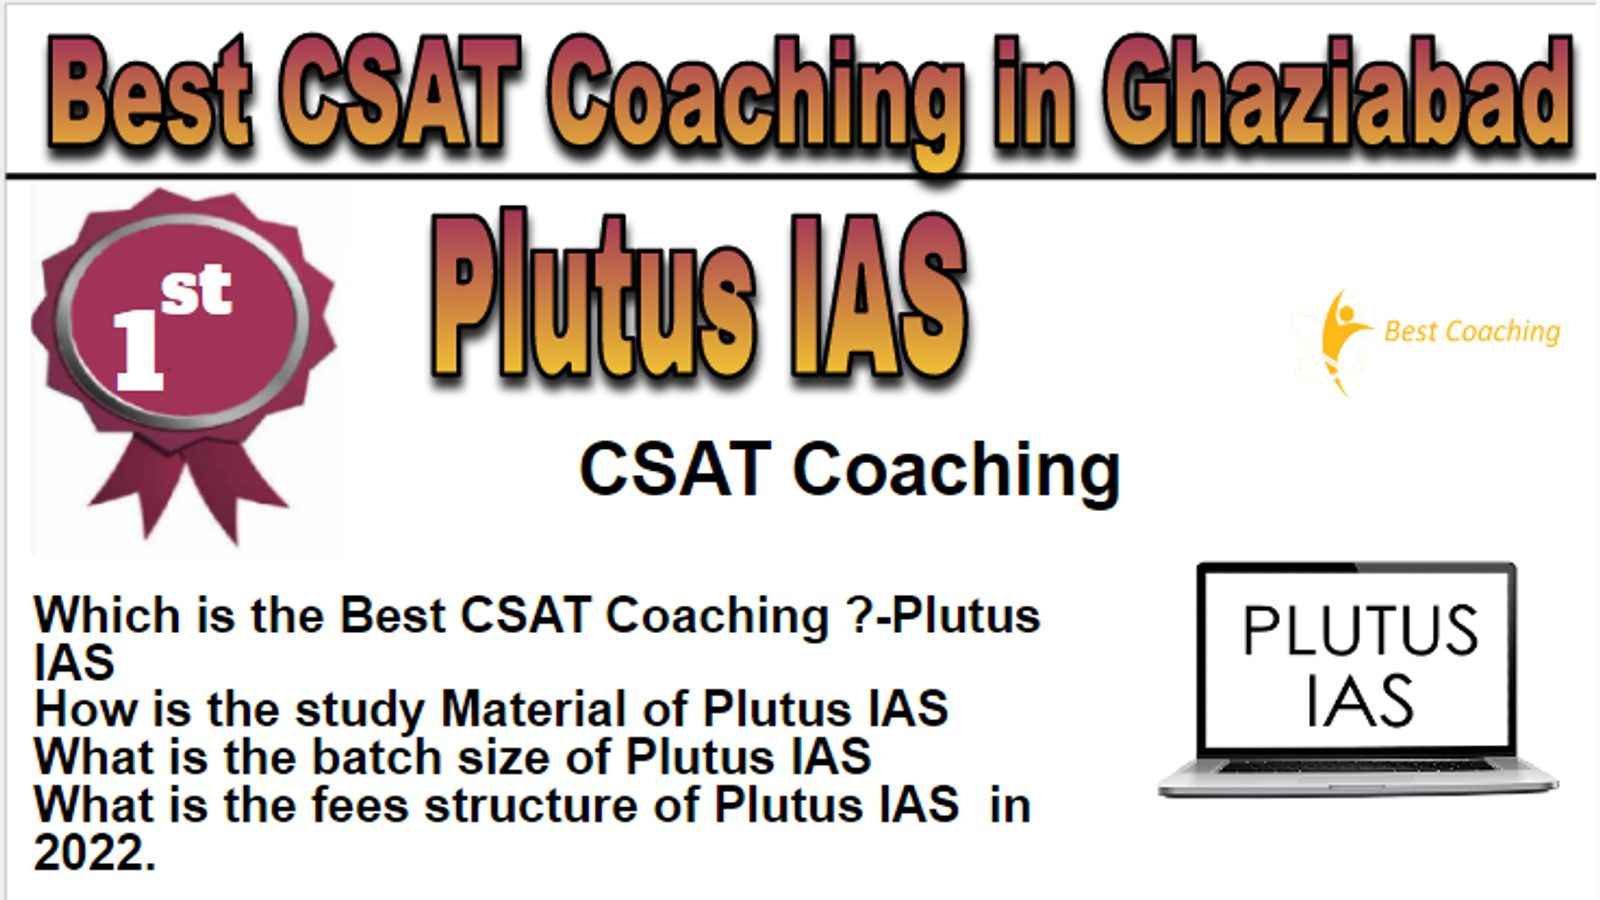 Rank 1 Best CSAT Coaching in Ghaziabad